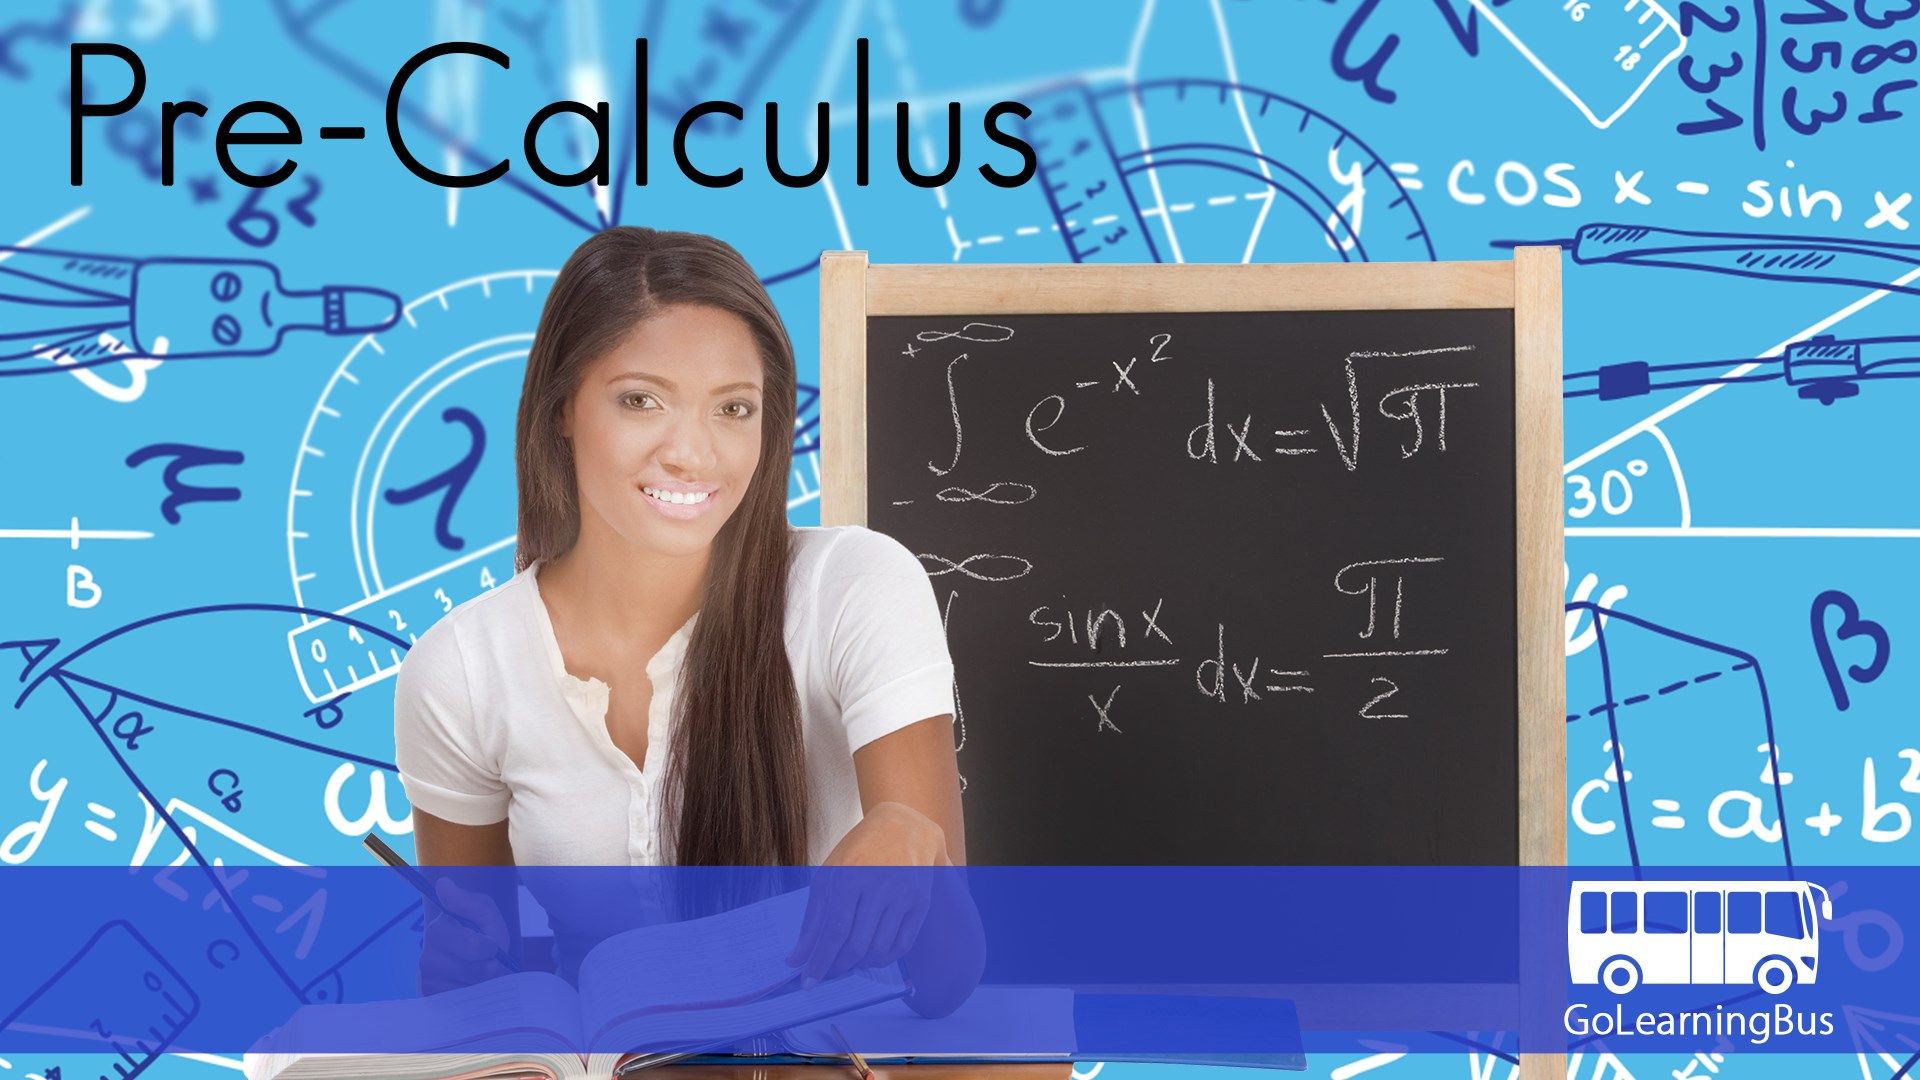 Pre-Calculus by WAGmob